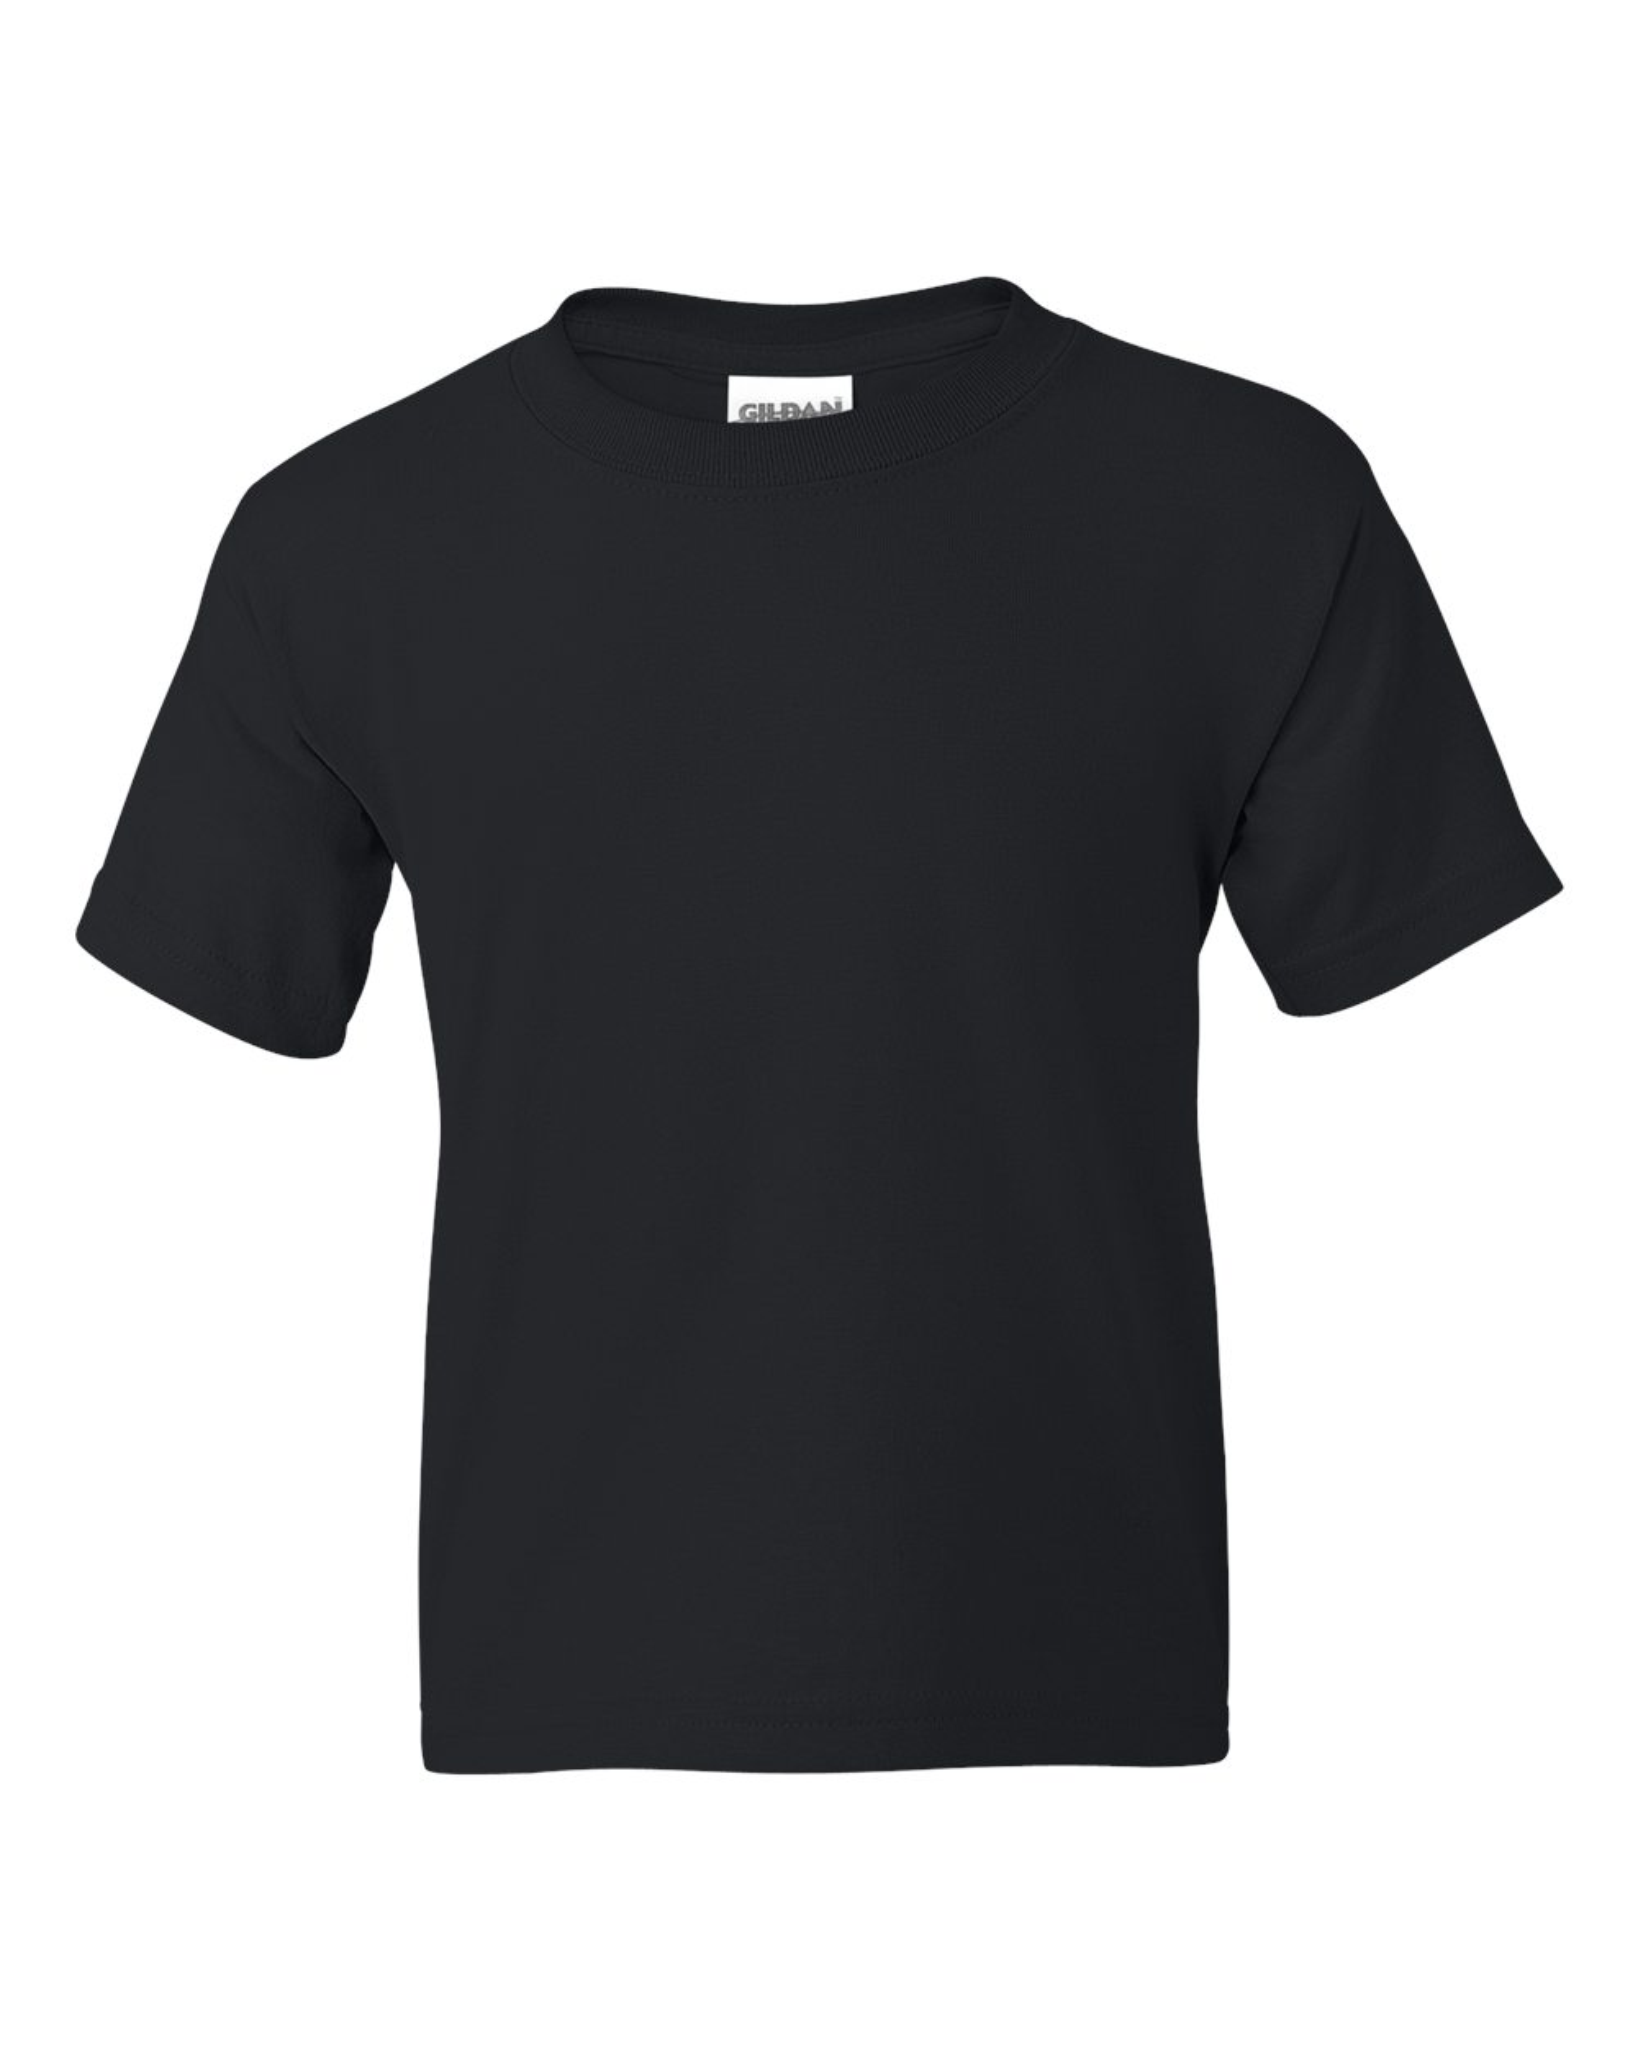 Youth T-Shirt - Cotton/Polyester - Gildan 8000B